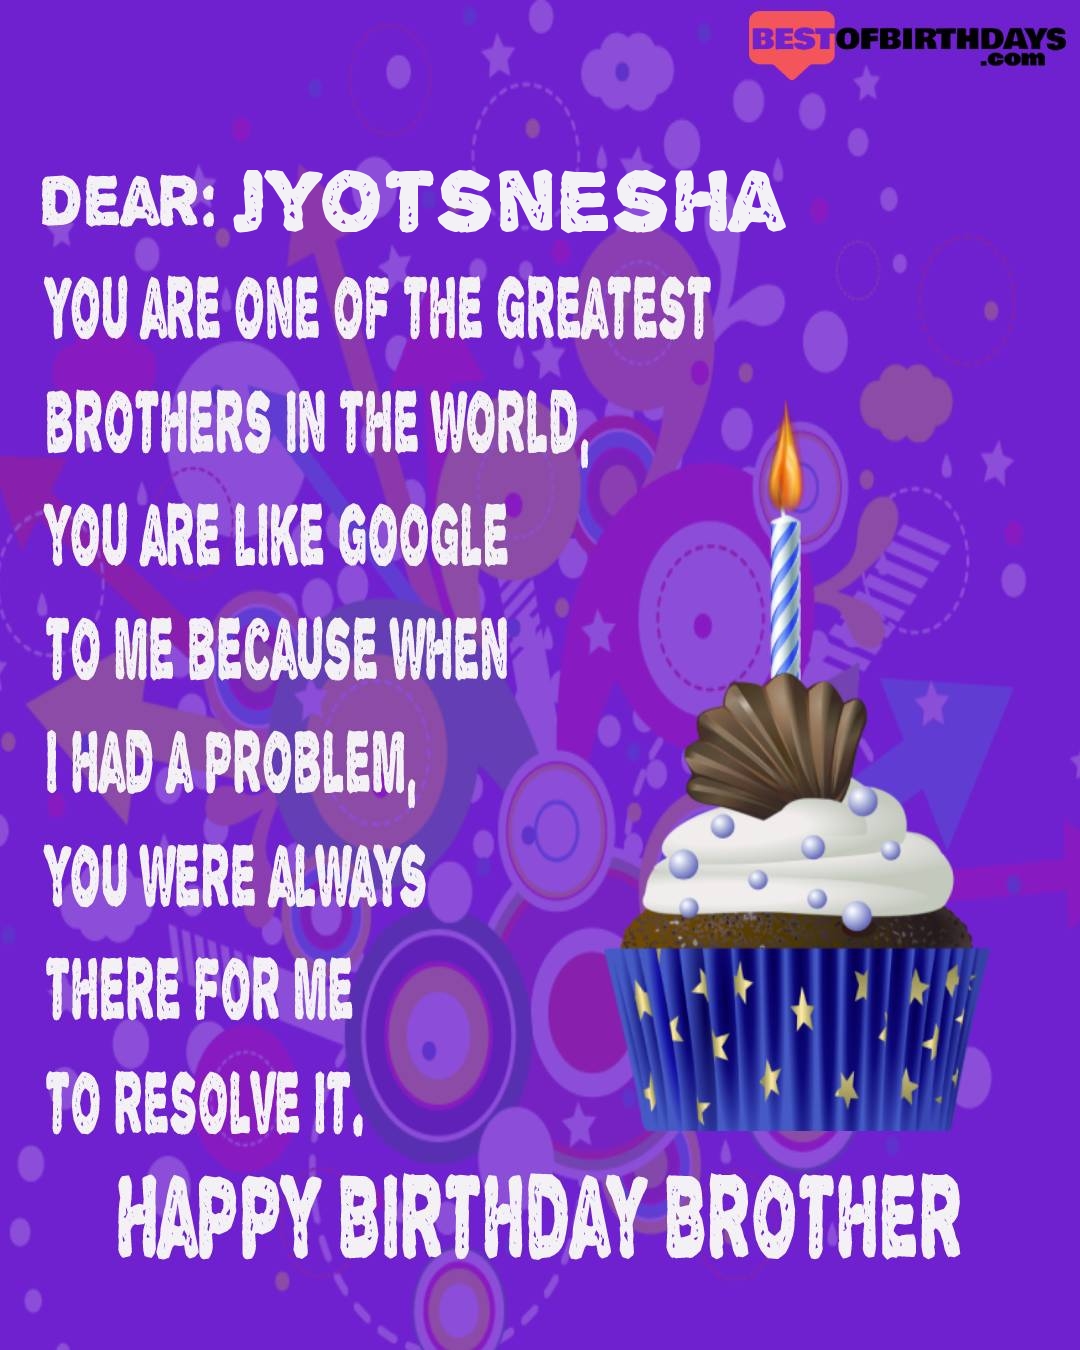 Happy birthday jyotsnesha bhai brother bro